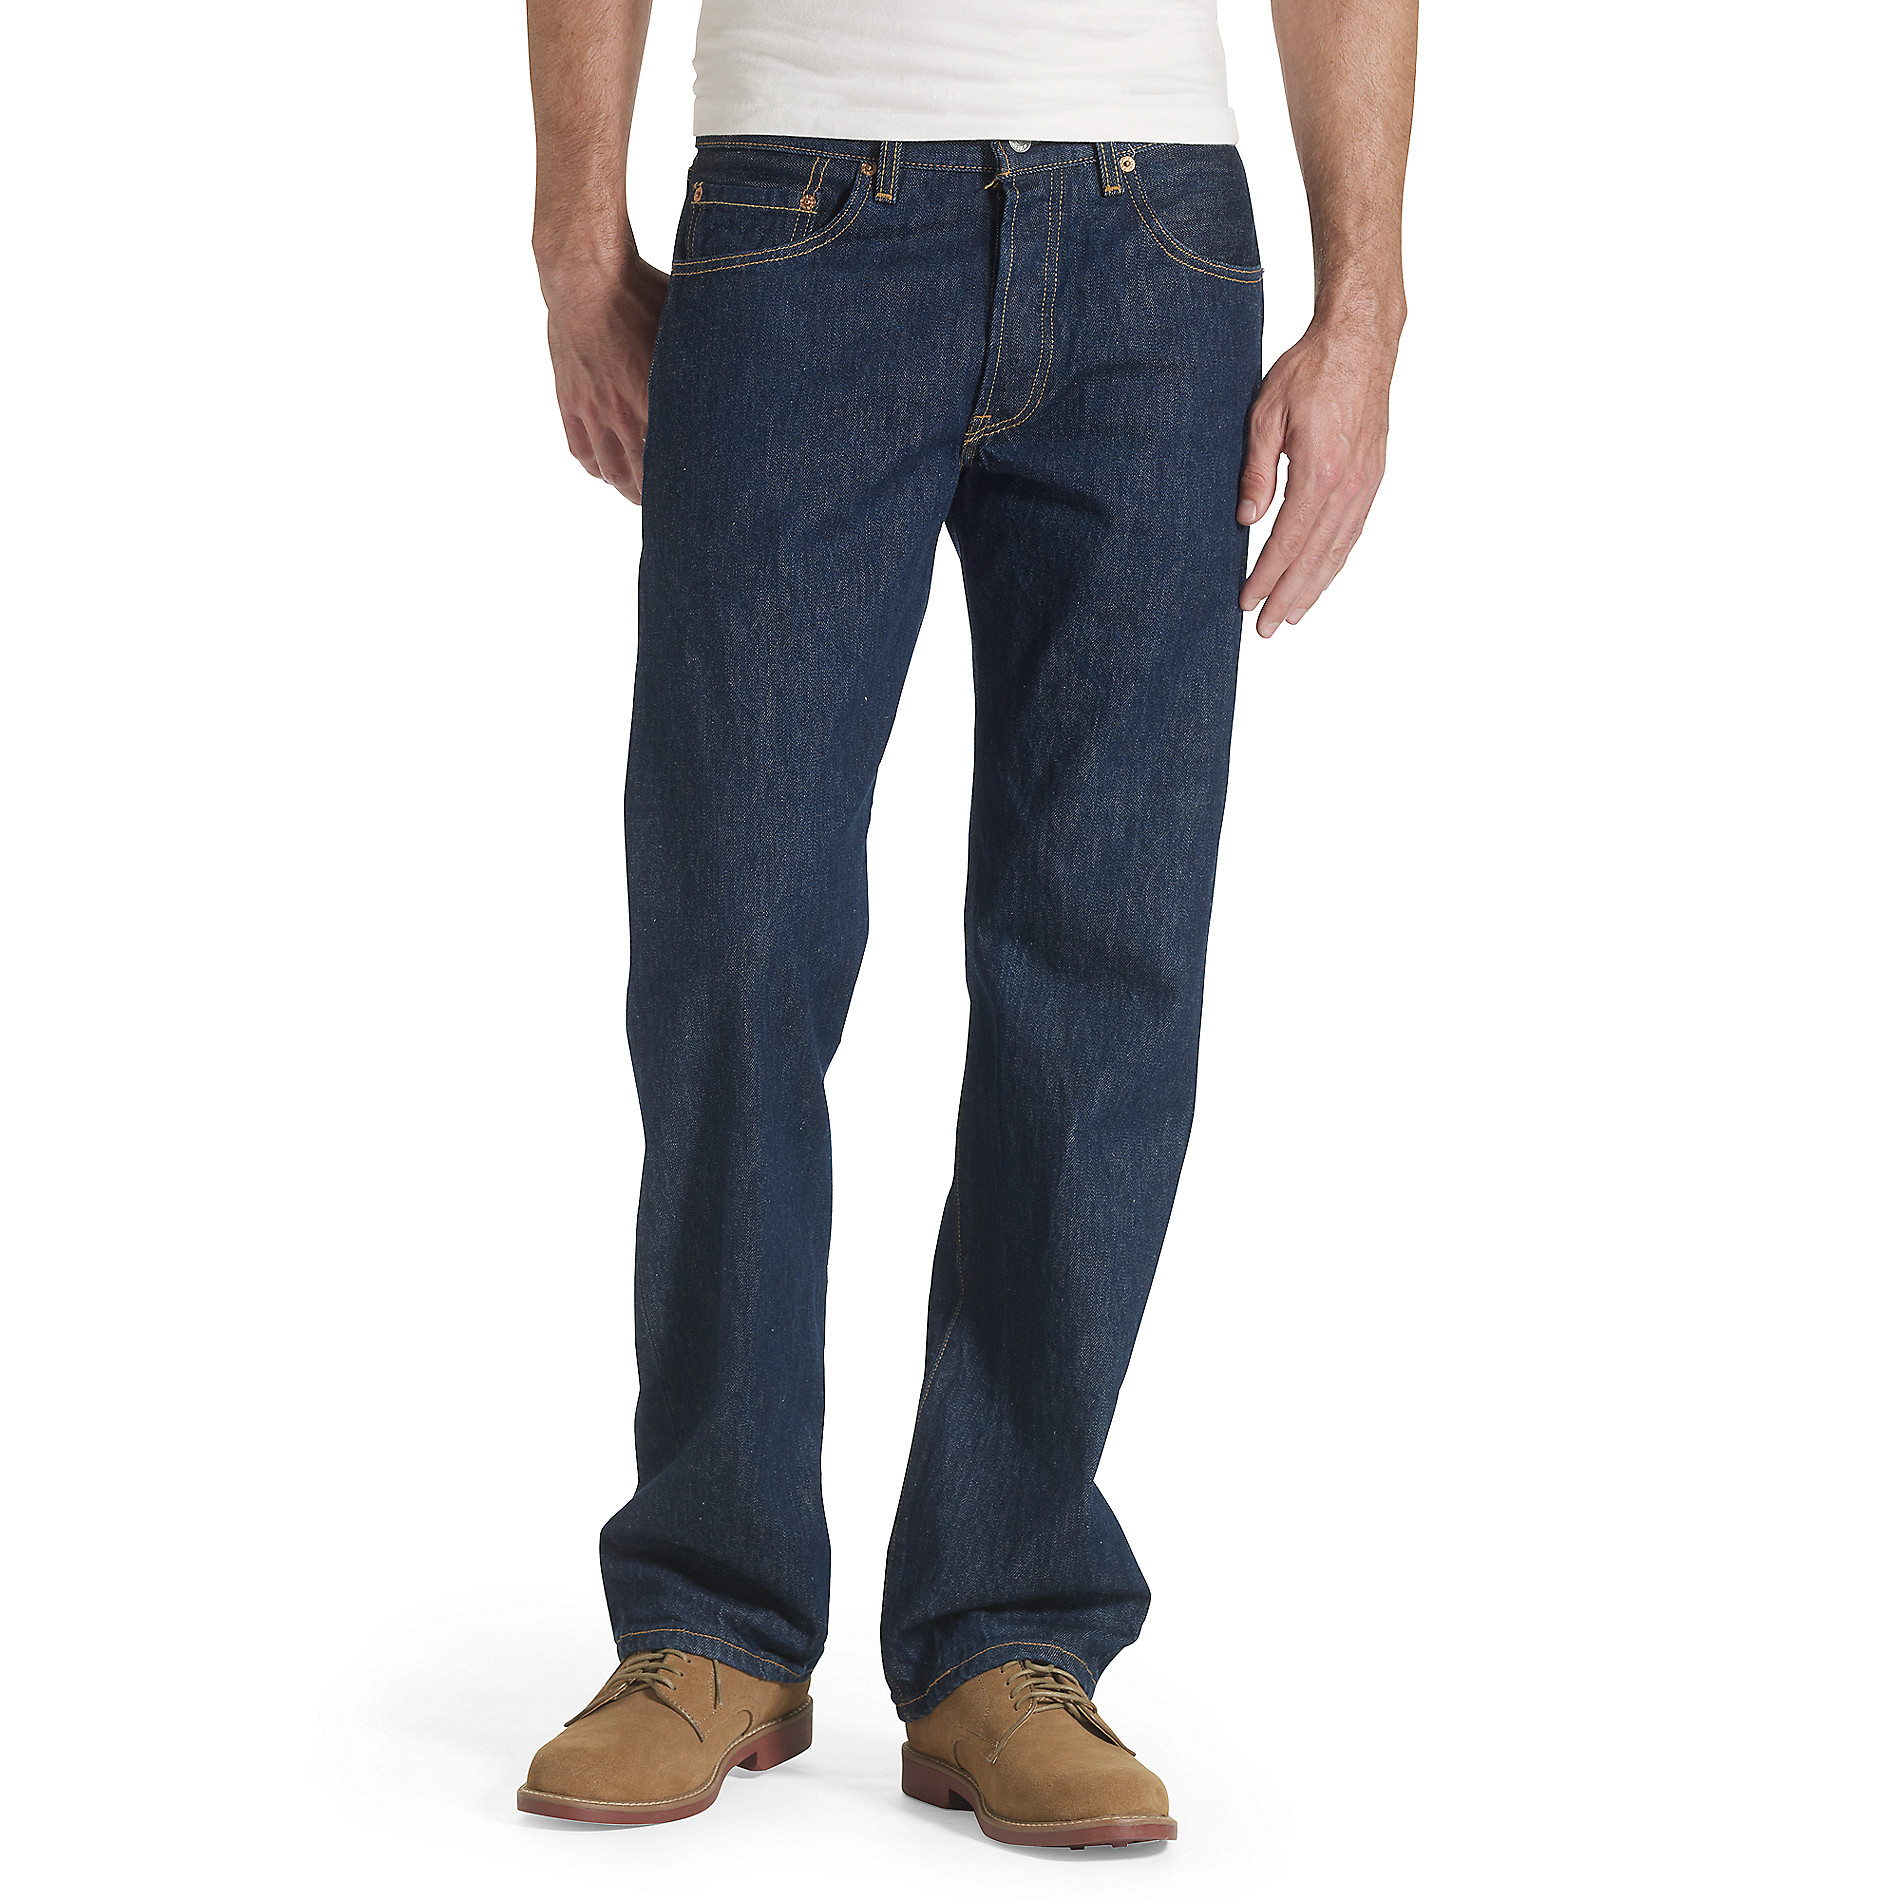 jeans levi strauss 501 original